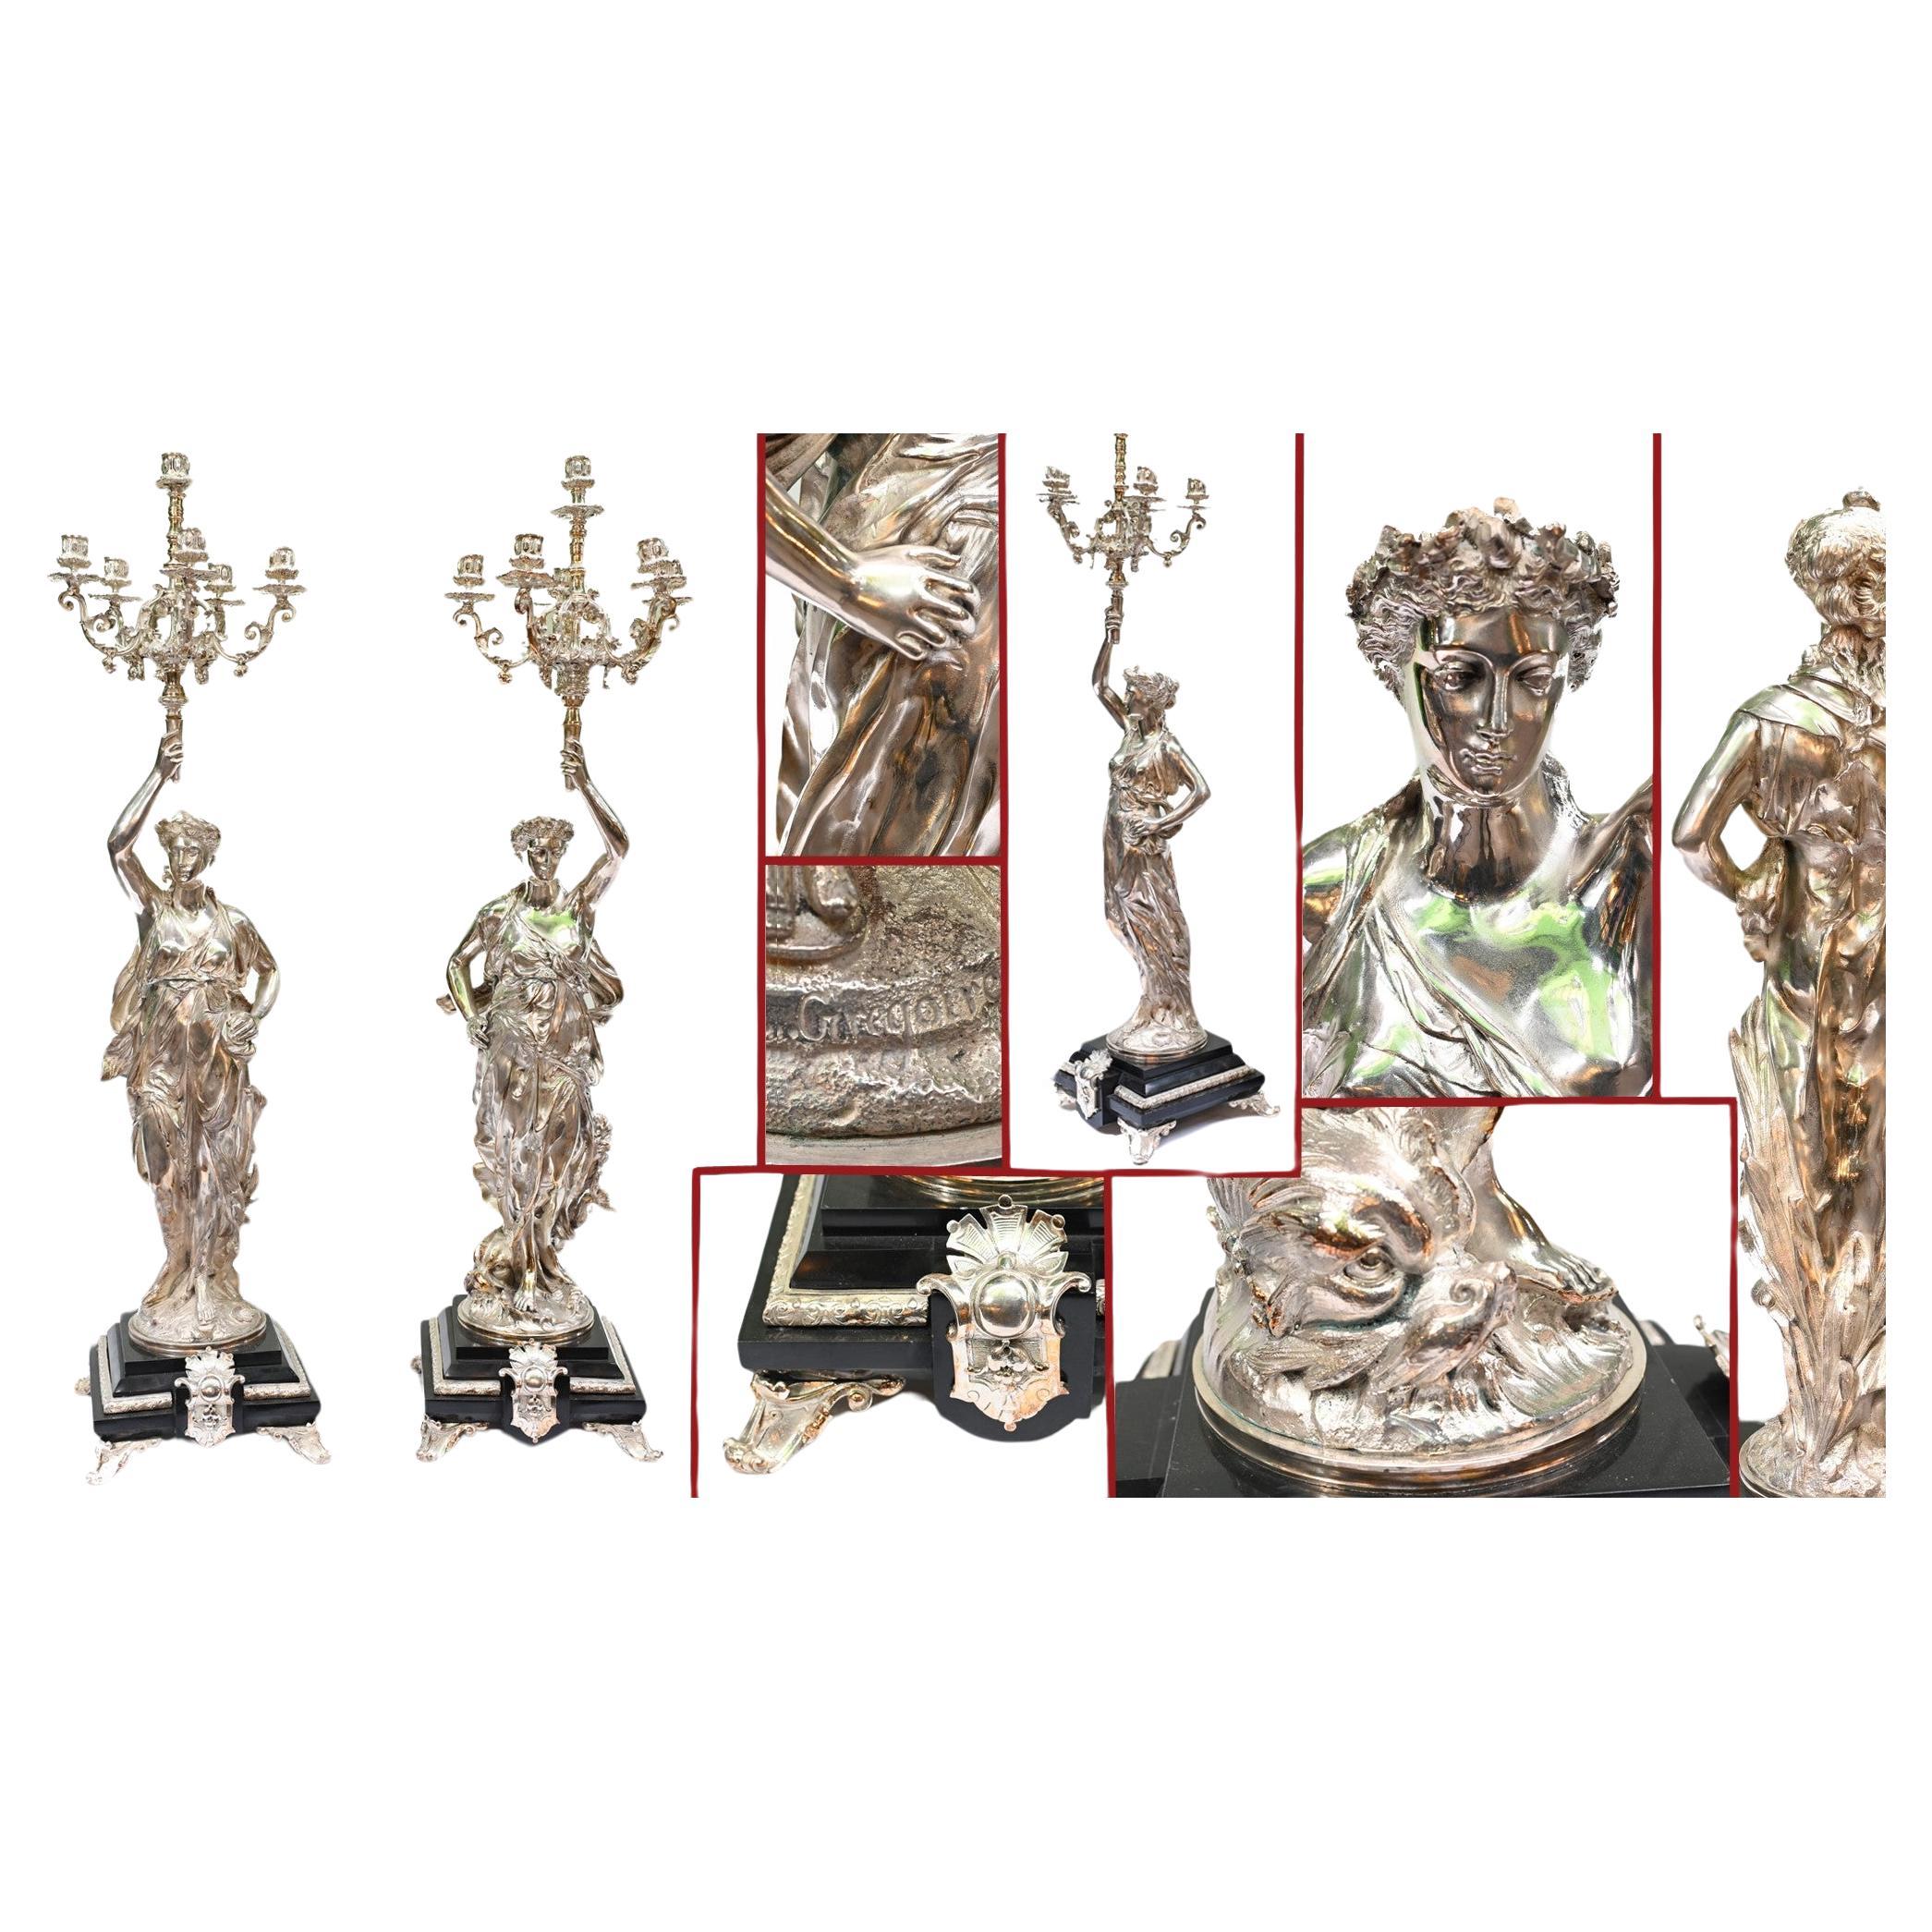 Pair Silver Bronze Candelabras by Gregoire Figurines